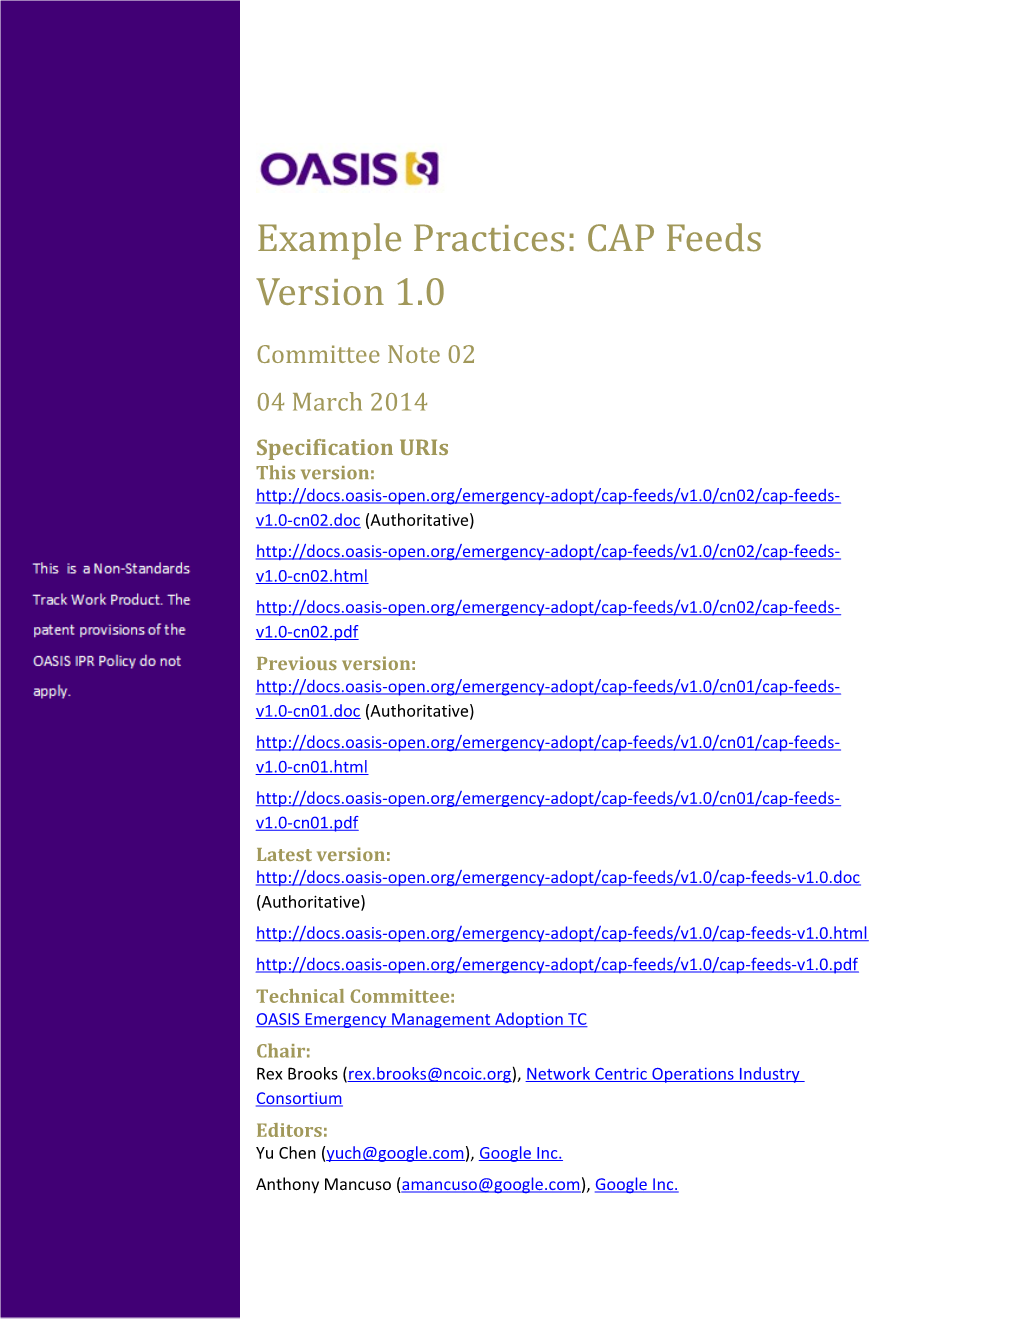 Example Practices: CAP Feeds Version 1.0